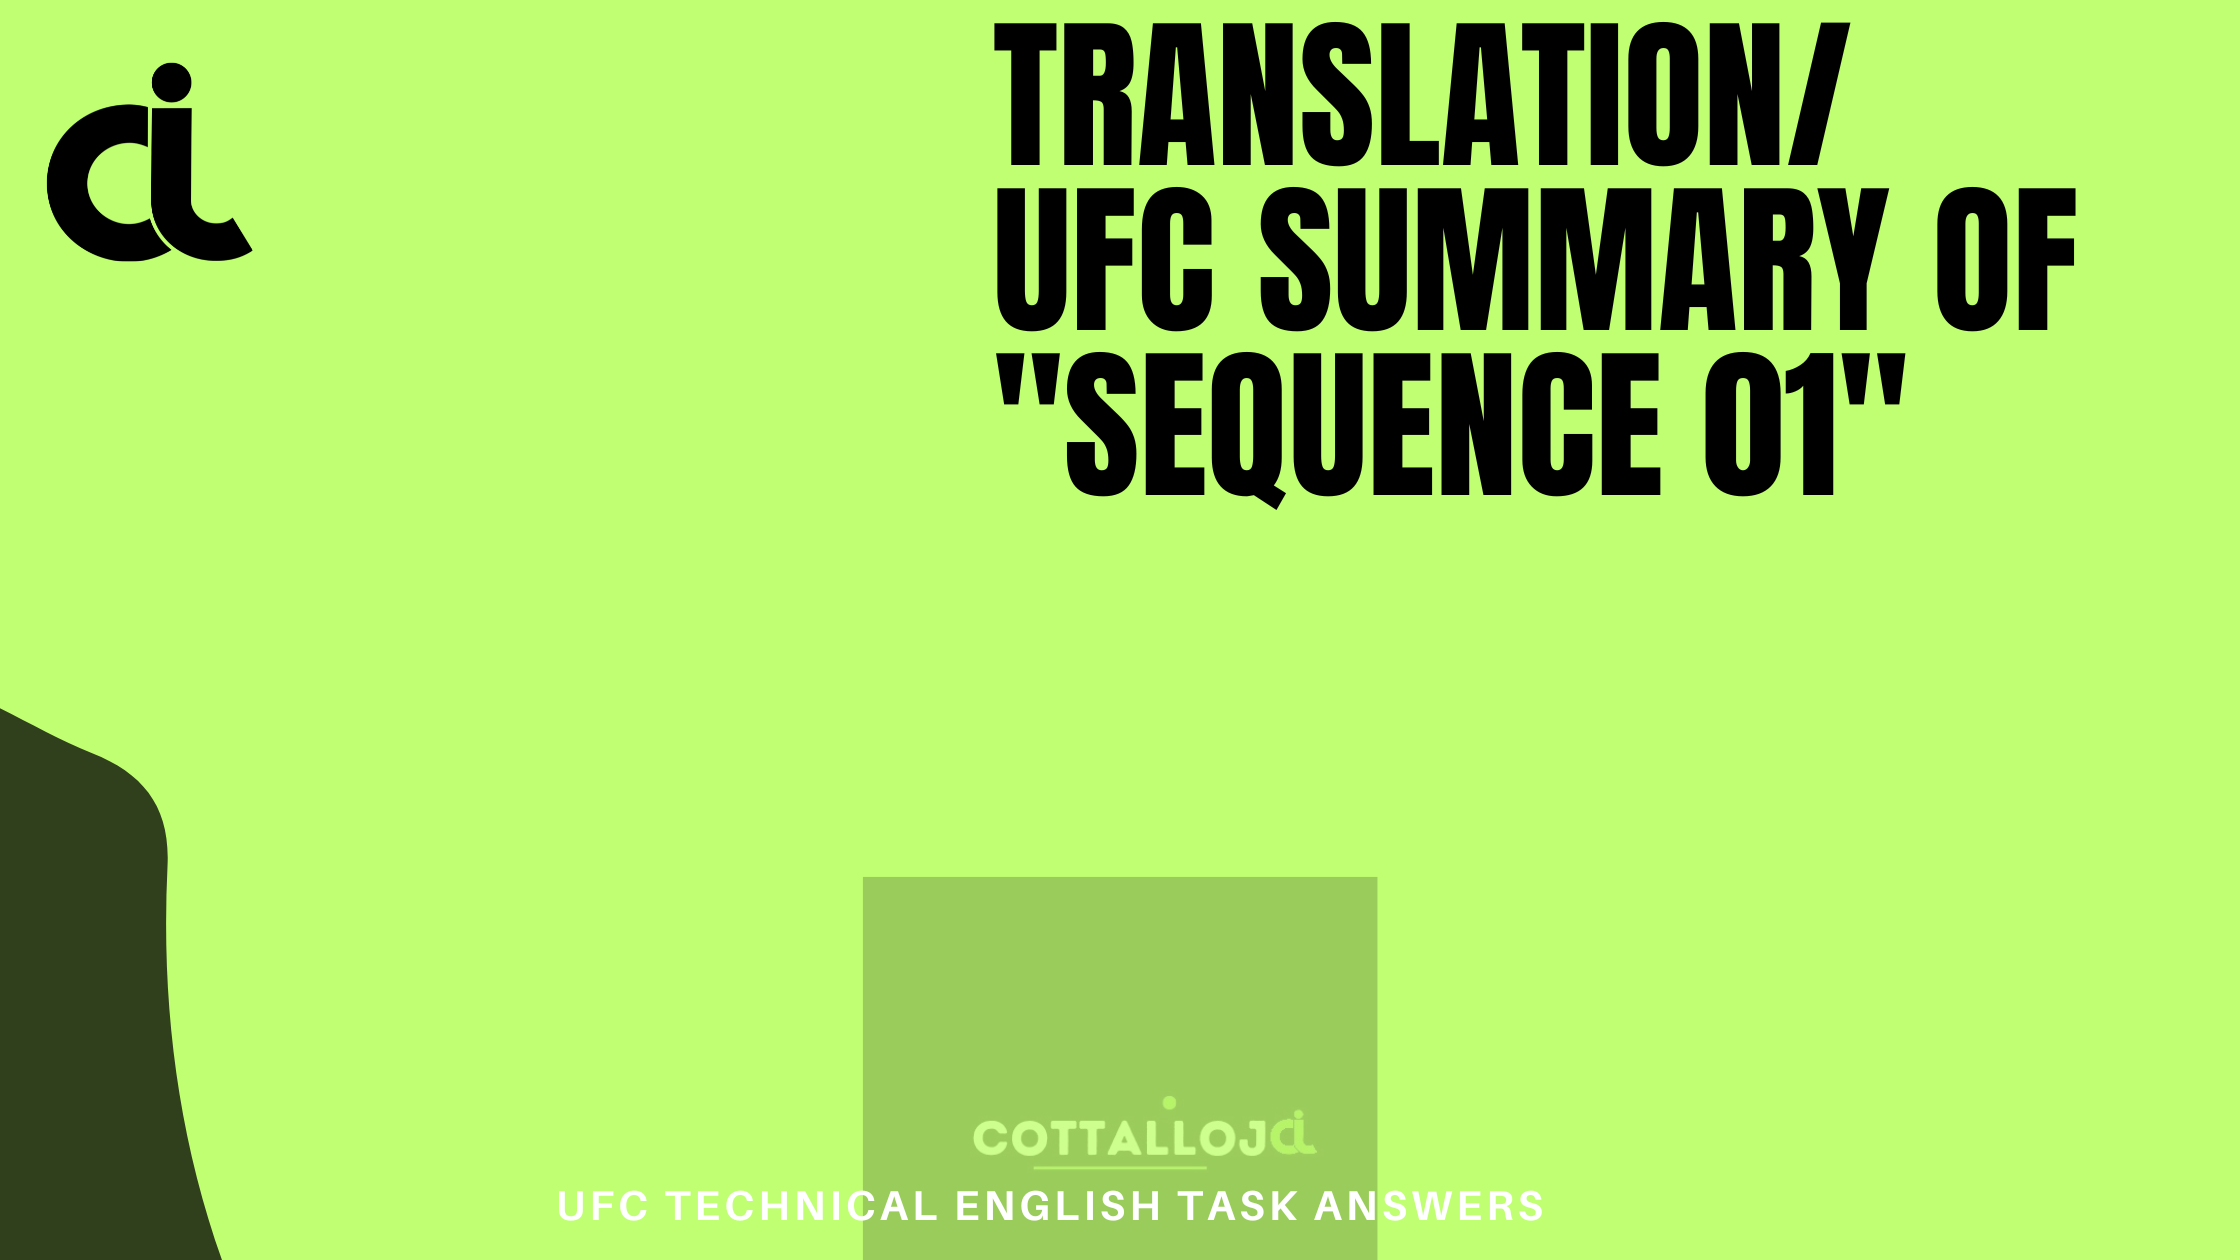 Translation/ ufc Summary of "Sequence 01"